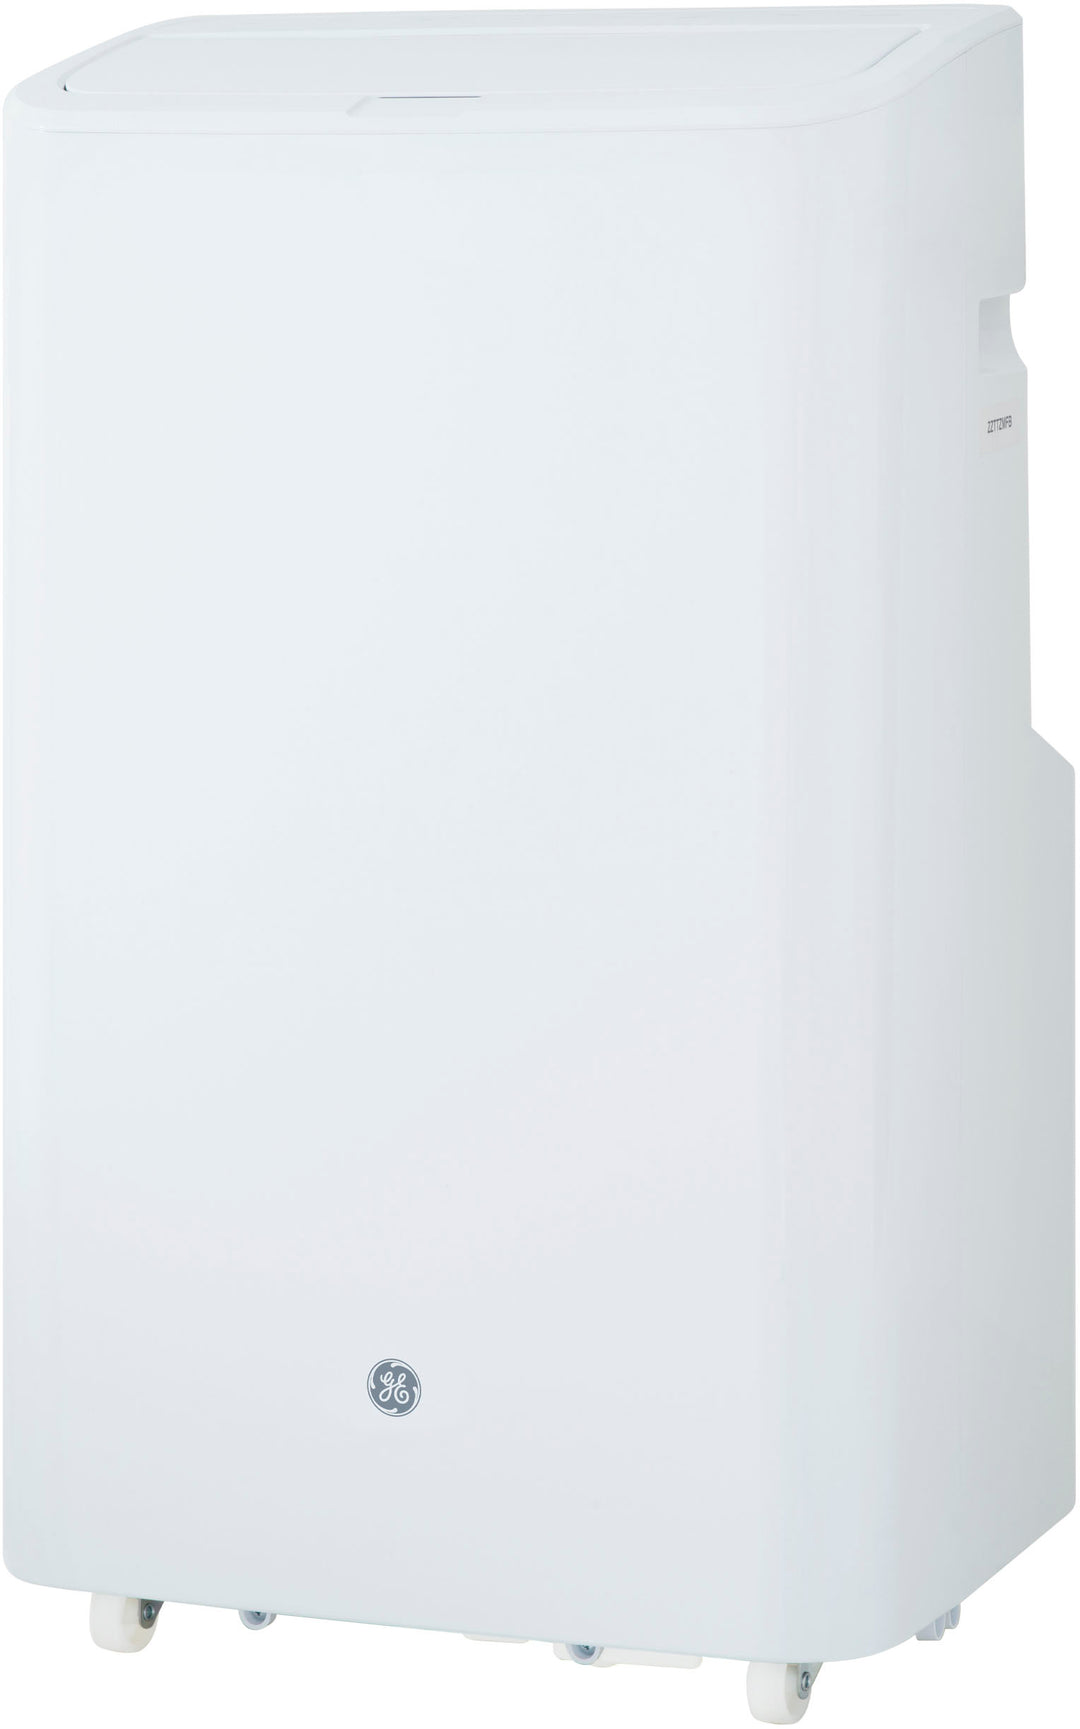 GE - 350 Sq. Ft. 8100 BTU Smart Portable Air Conditioner - White_11